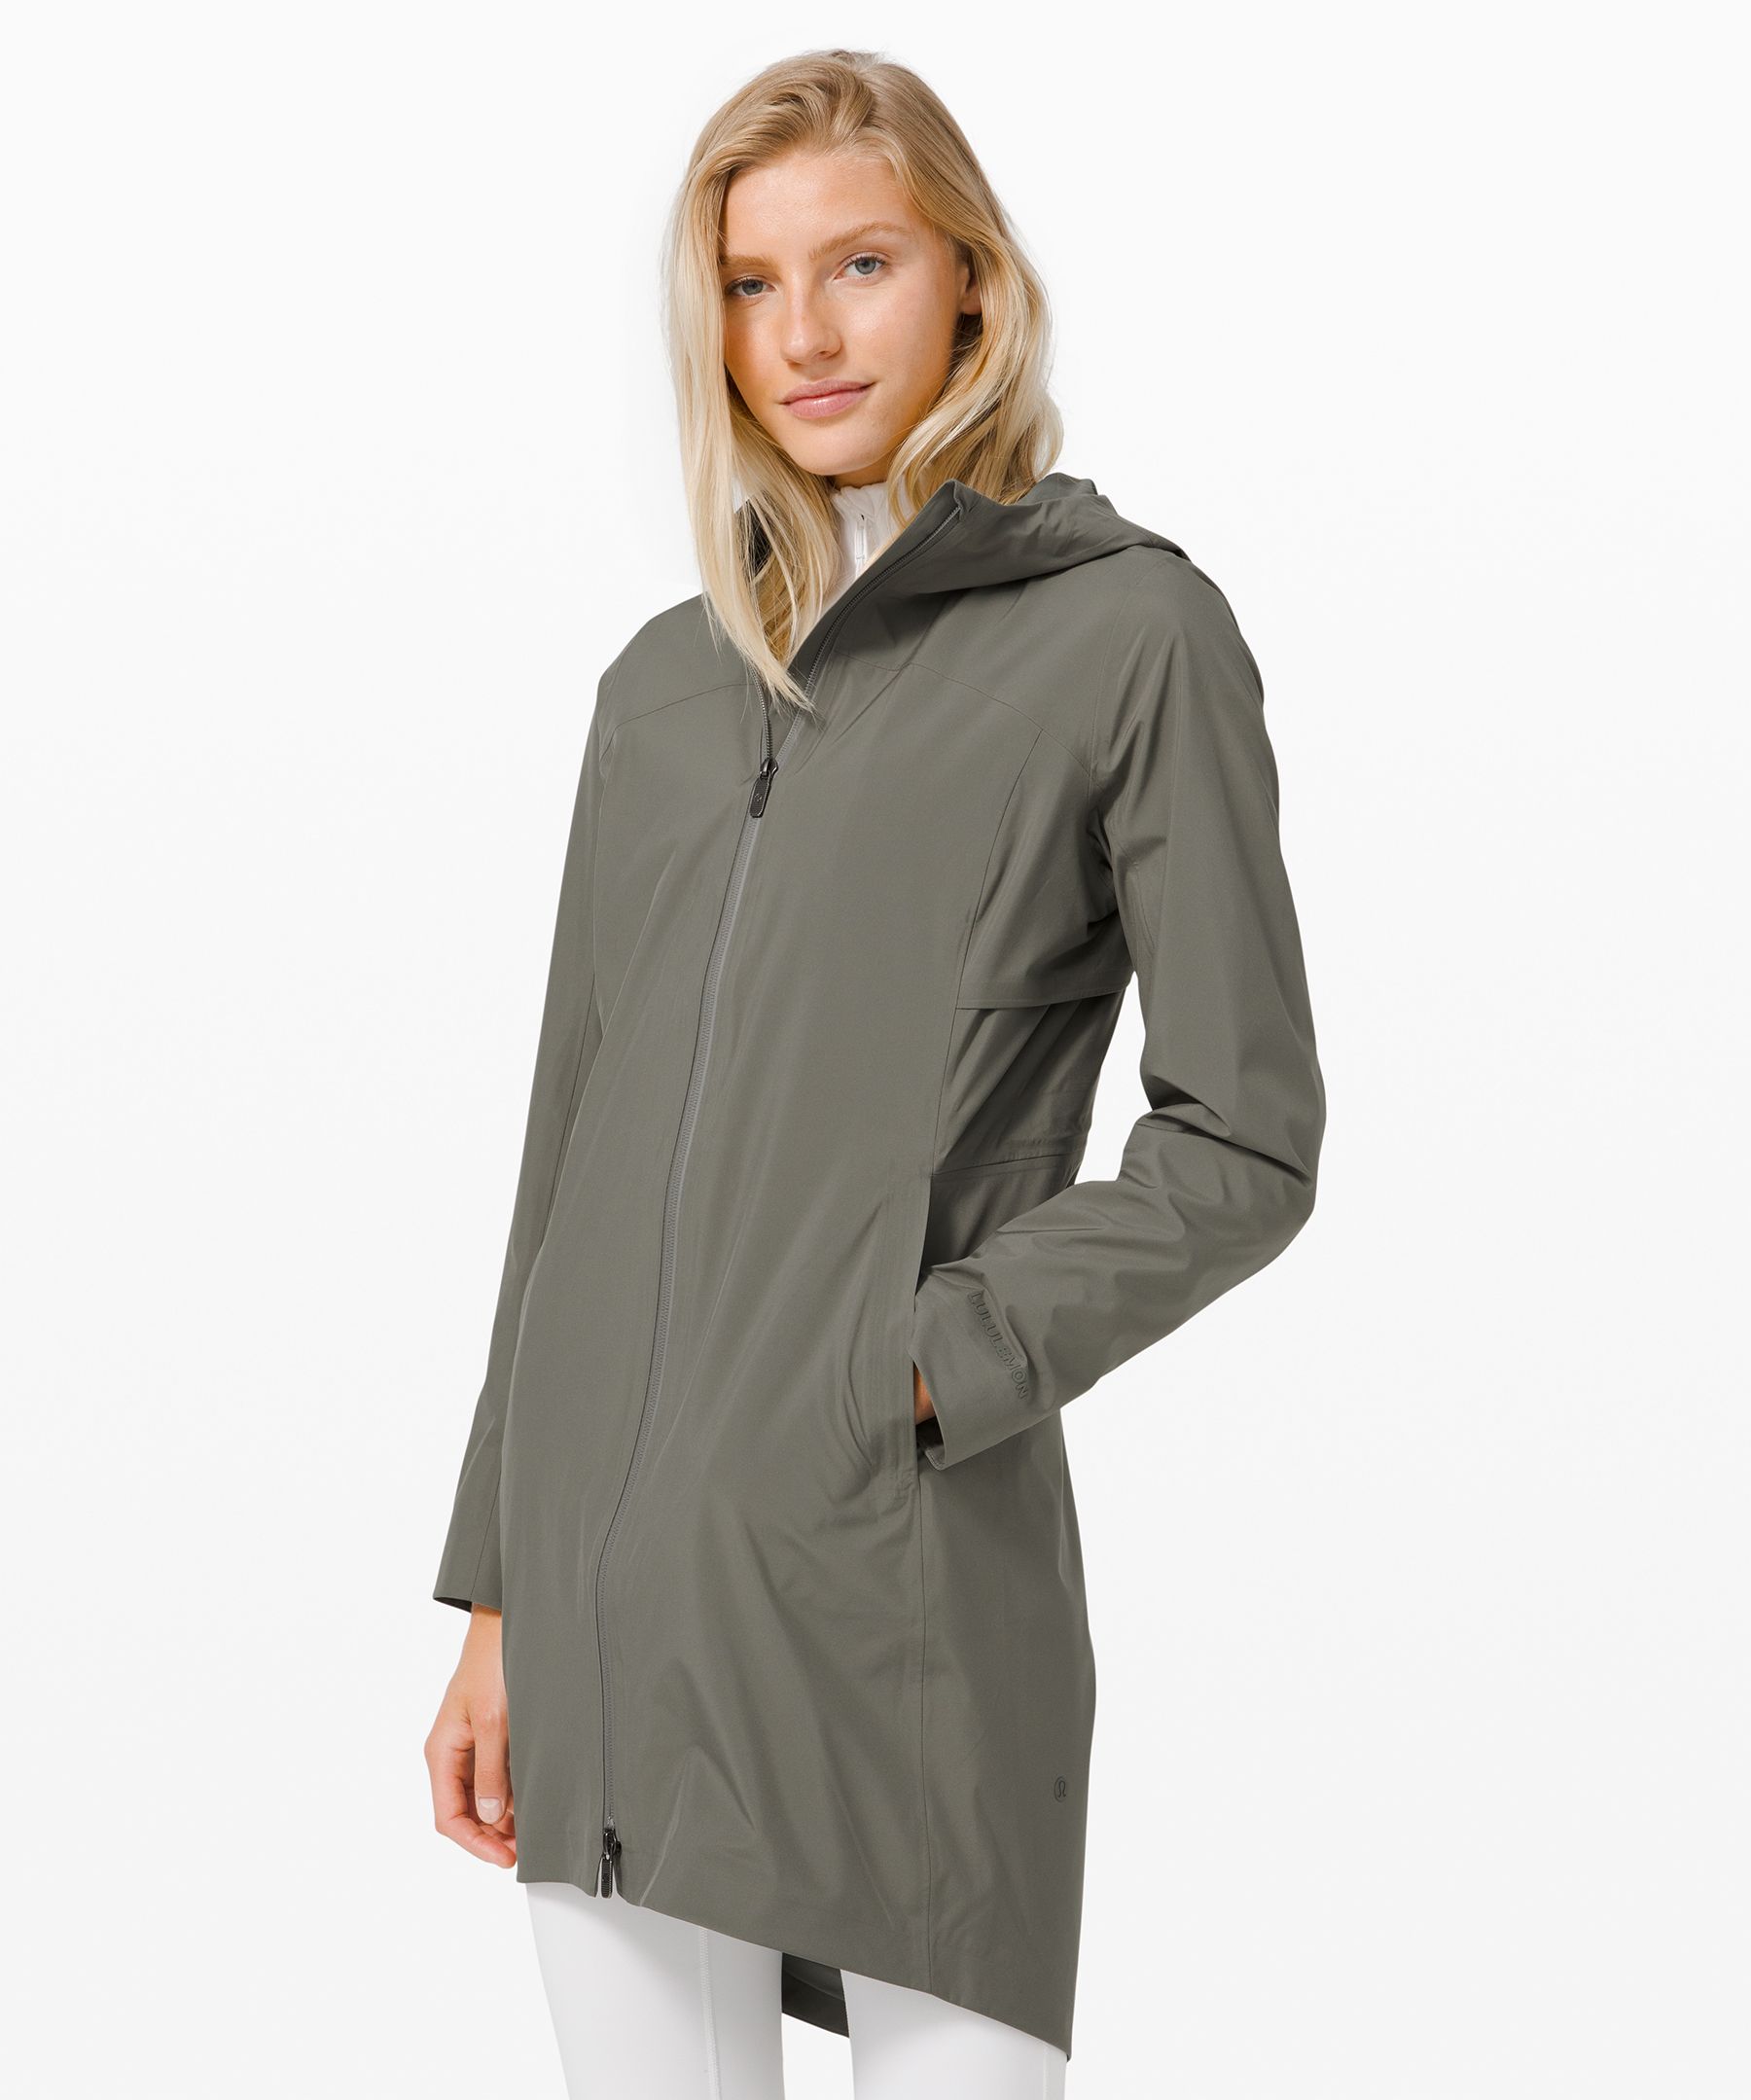 rain rebel jacket review